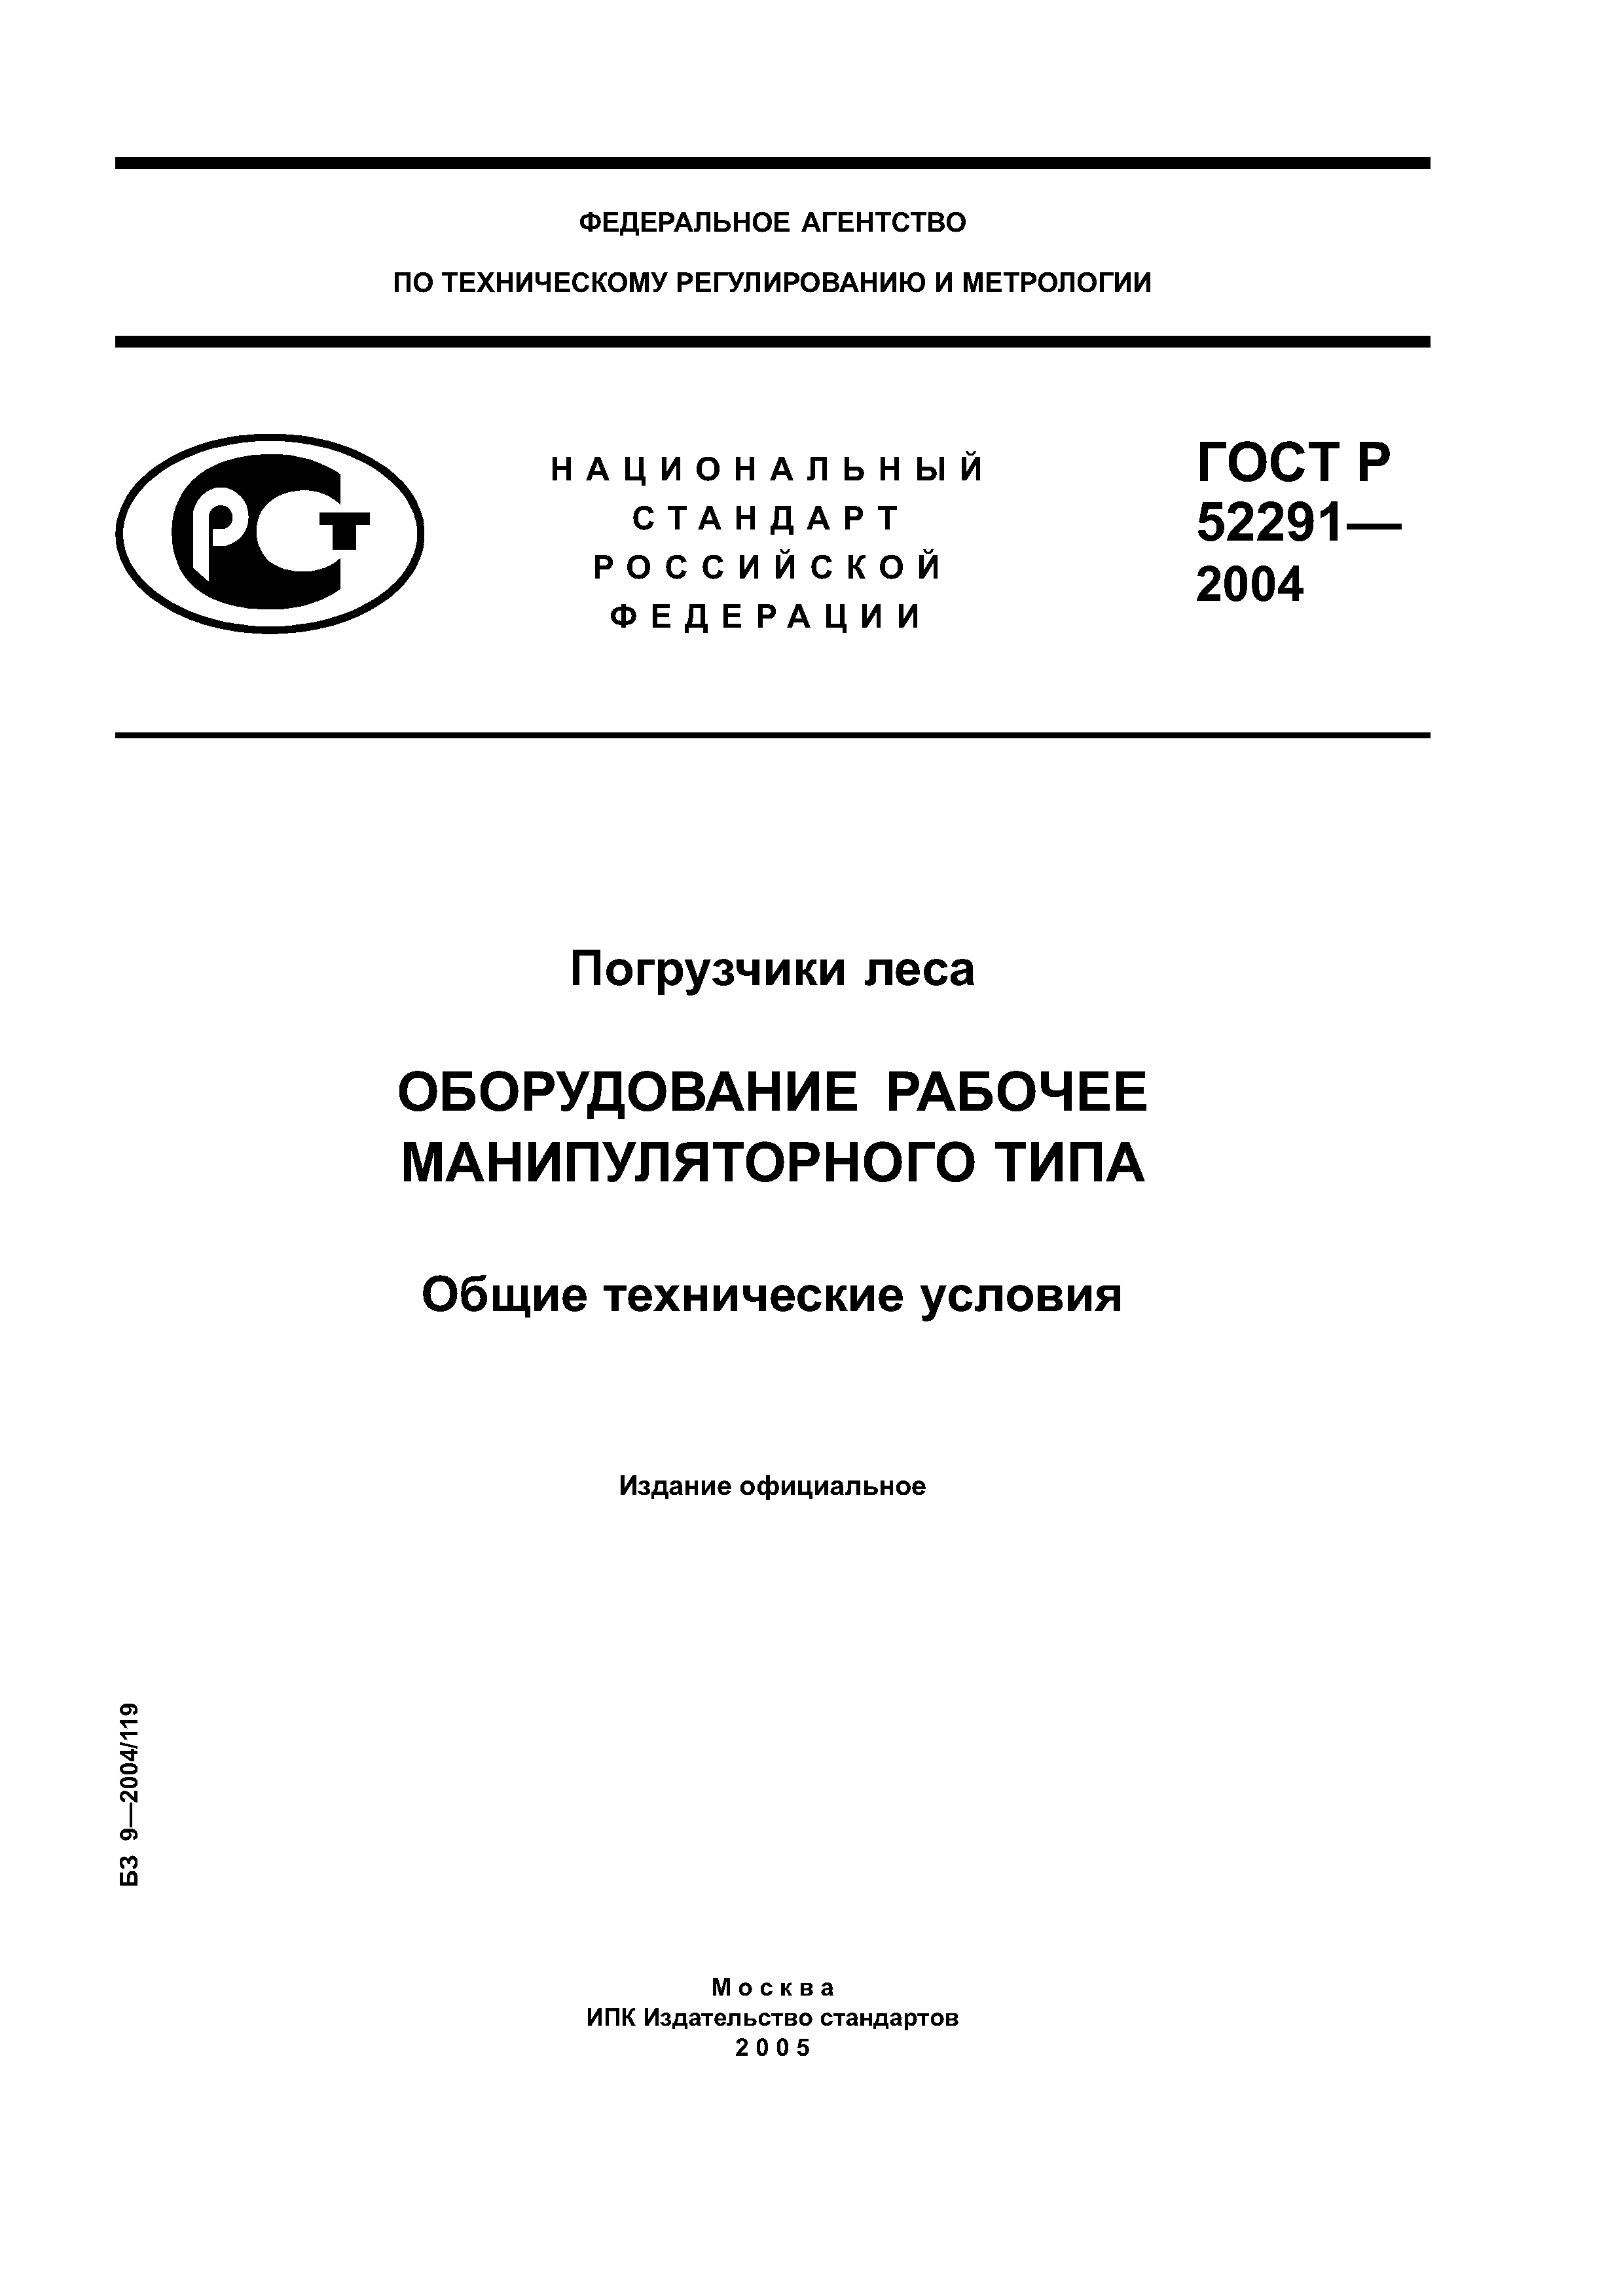 ГОСТ Р 52291-2004